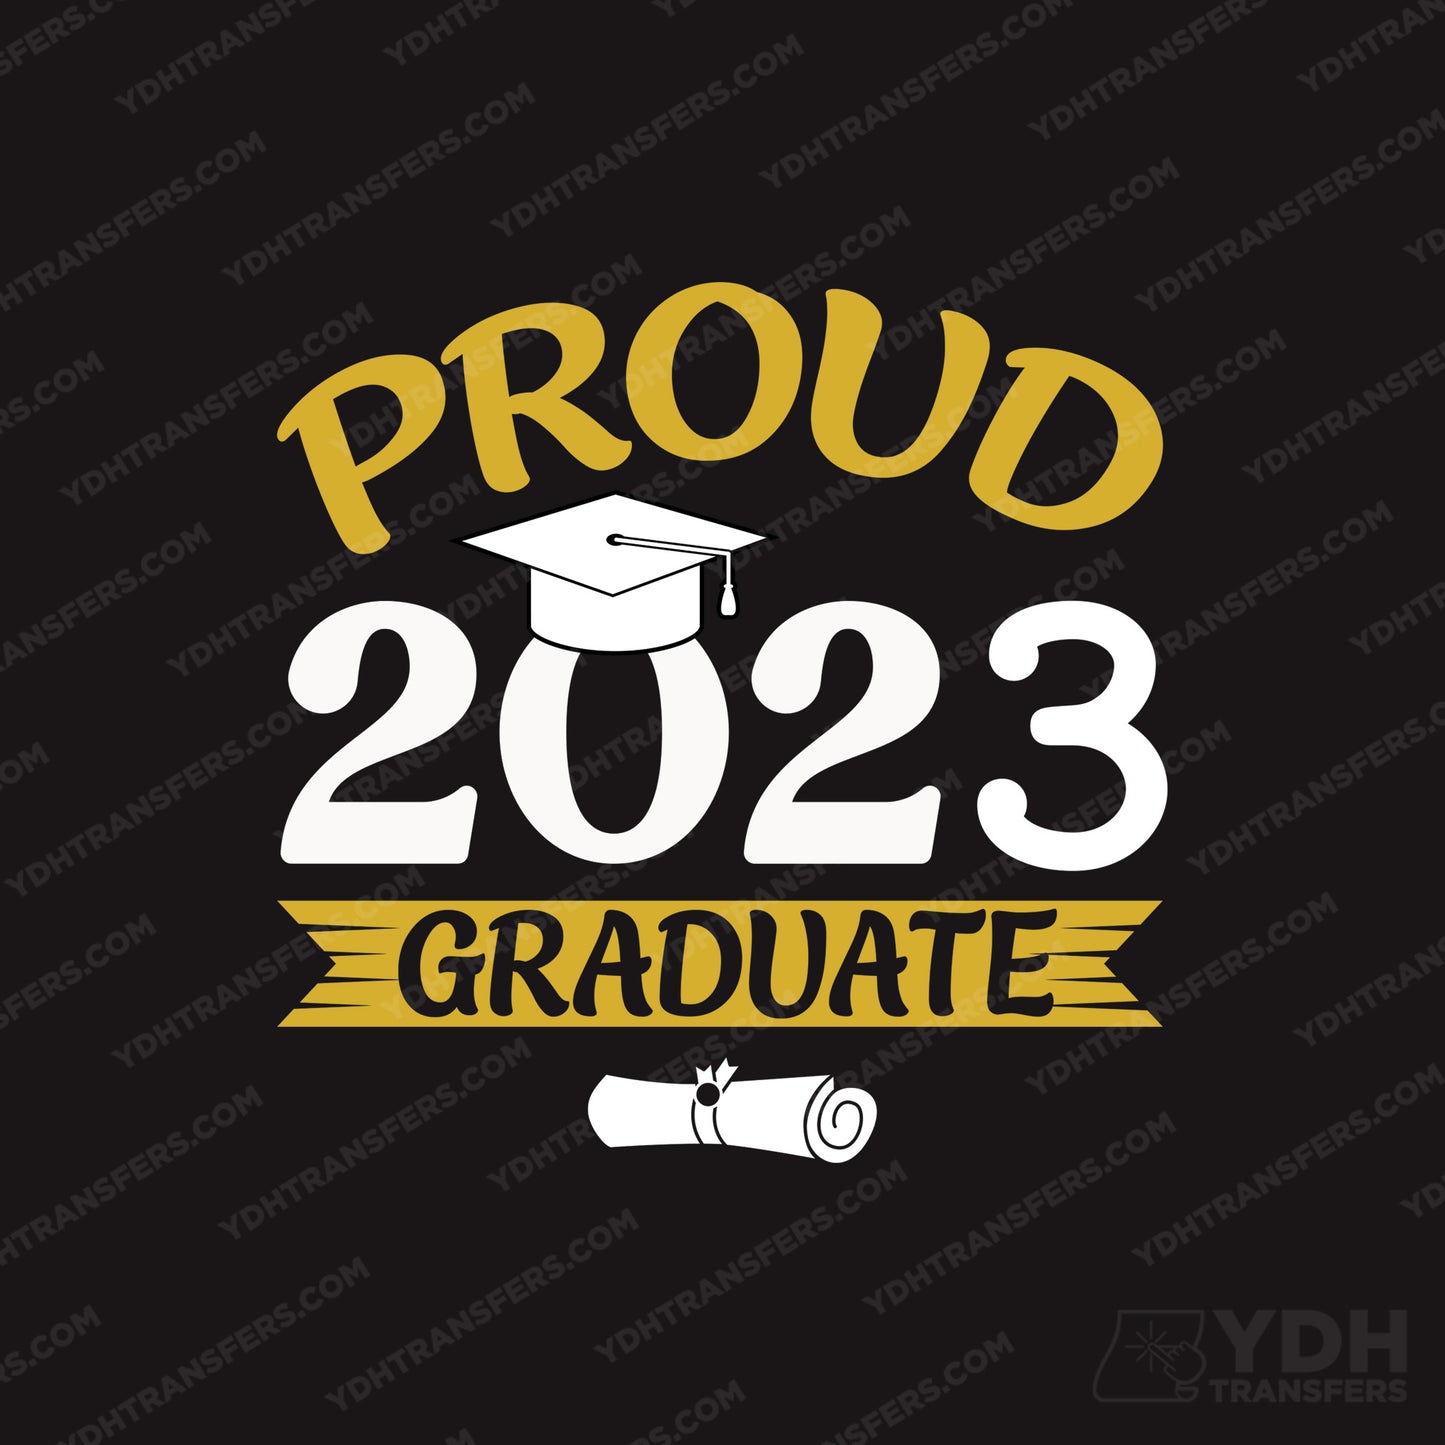 Proud Graduate 2023 Full Color Transfer